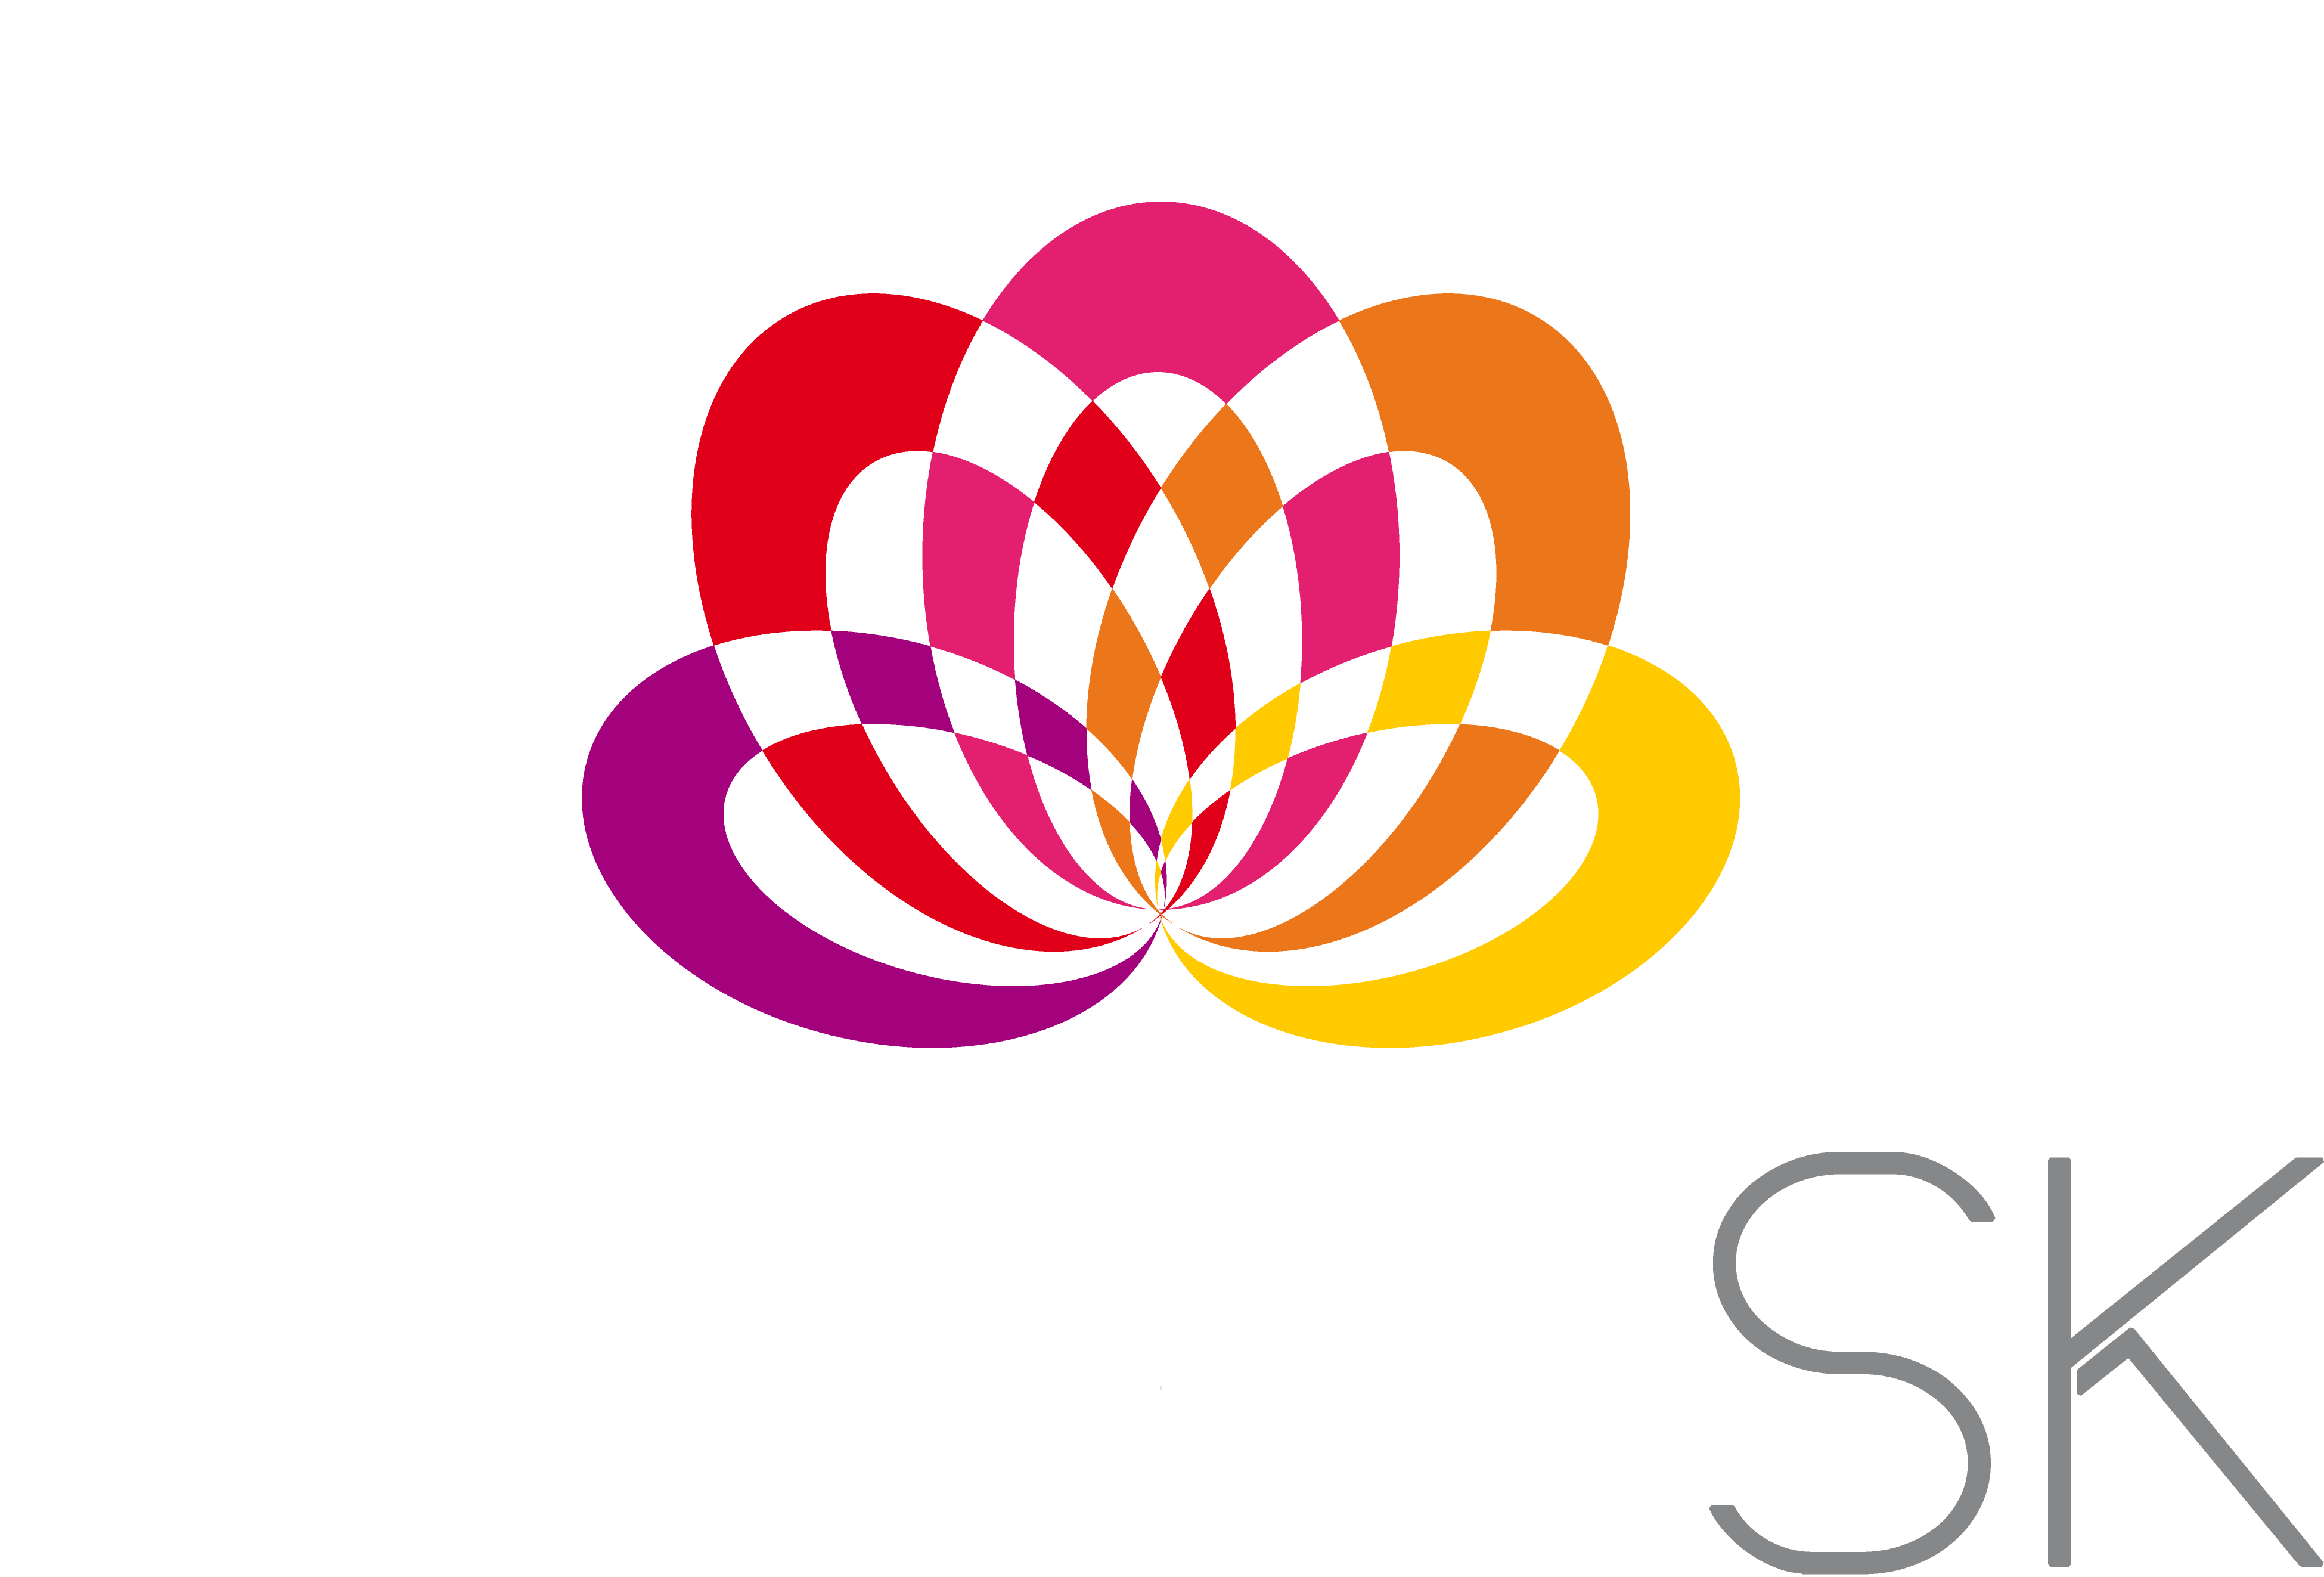 TRADUSK – Traductions Logo